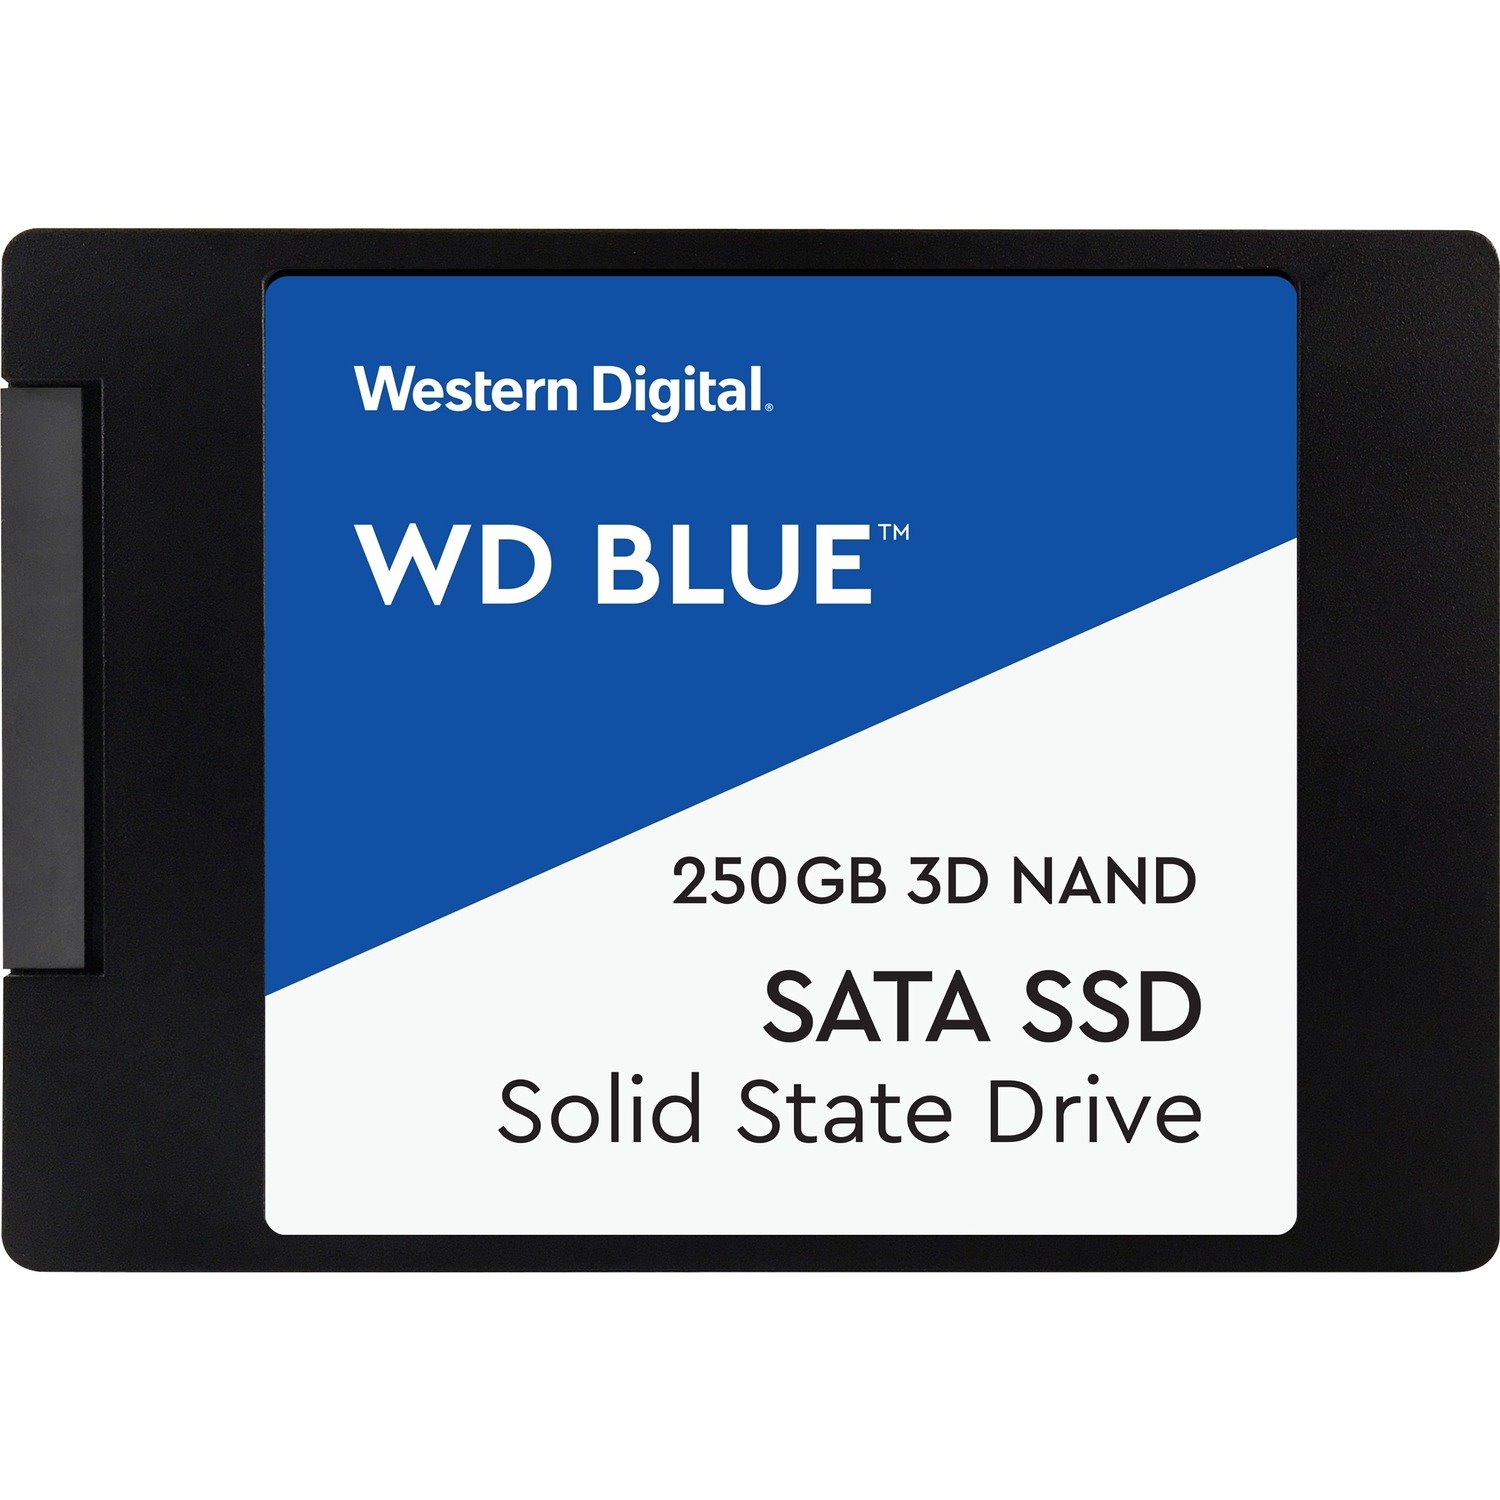 WD Blue 3D NAND 250GB PC SSD - SATA III 6 Gb/s 2.5"/7mm Solid State Drive